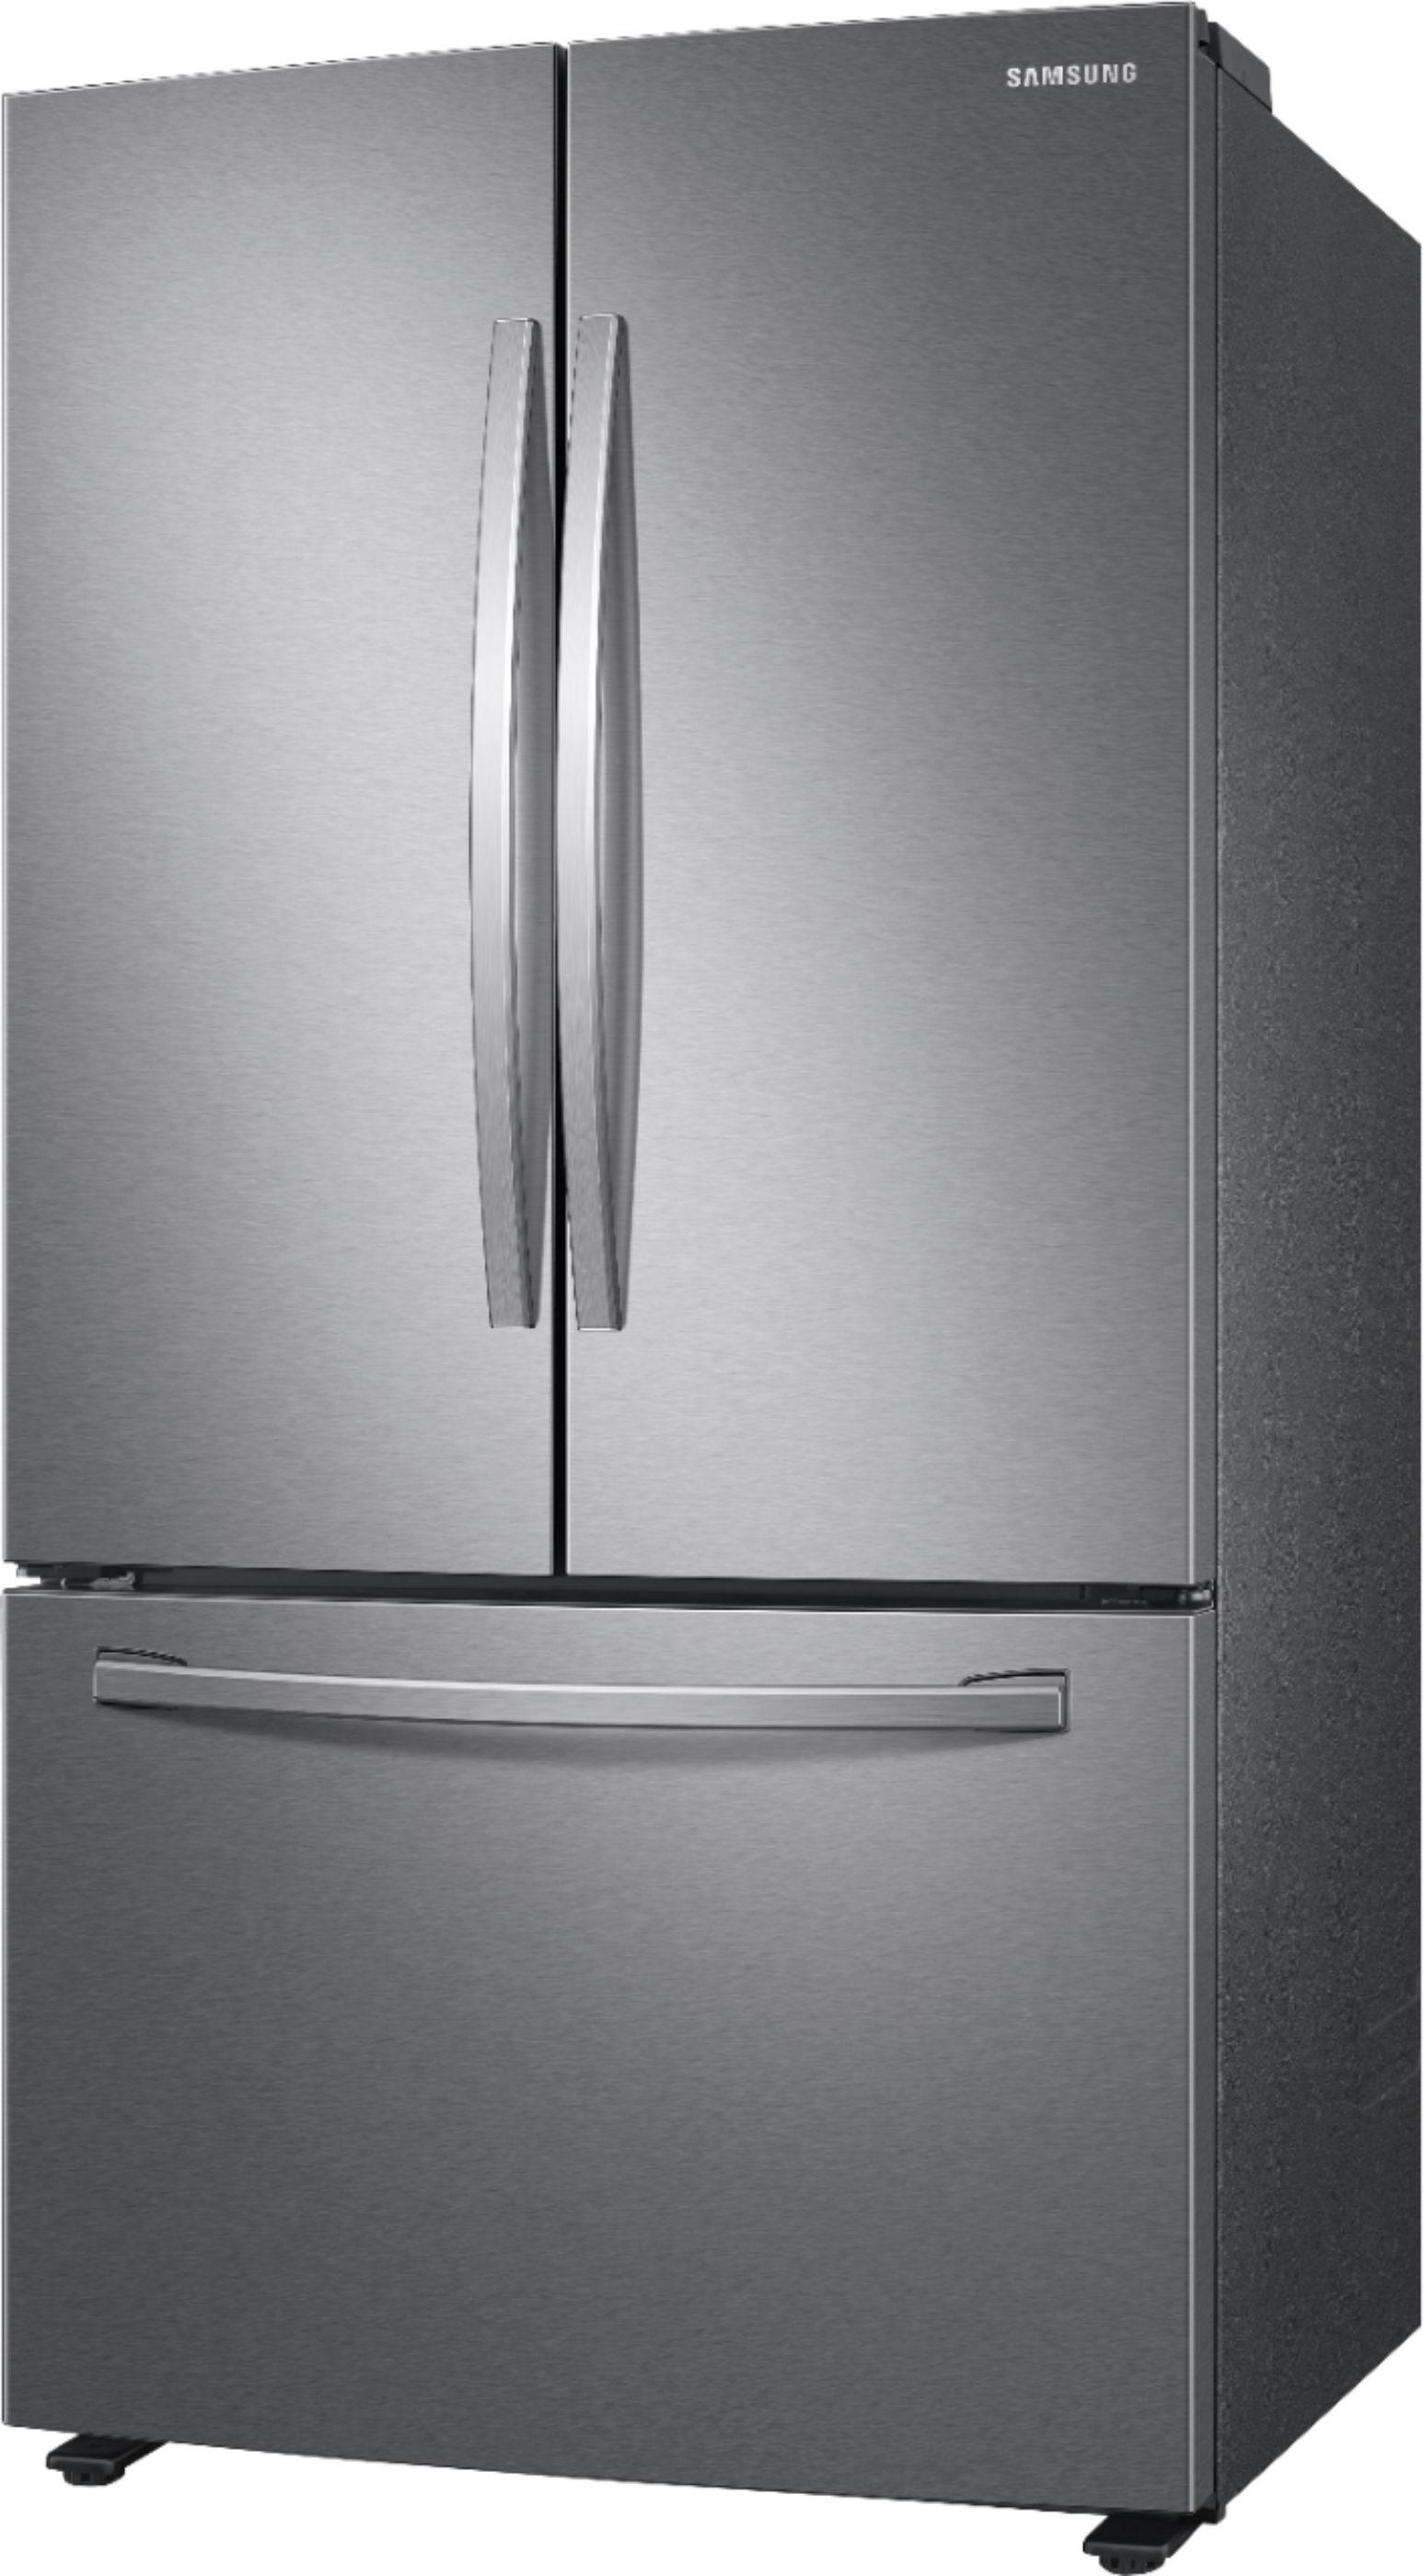 Left View: Samsung - 28 cu. ft. Large Capacity 3-Door French Door Refrigerator with Internal Water Dispenser - Stainless steel